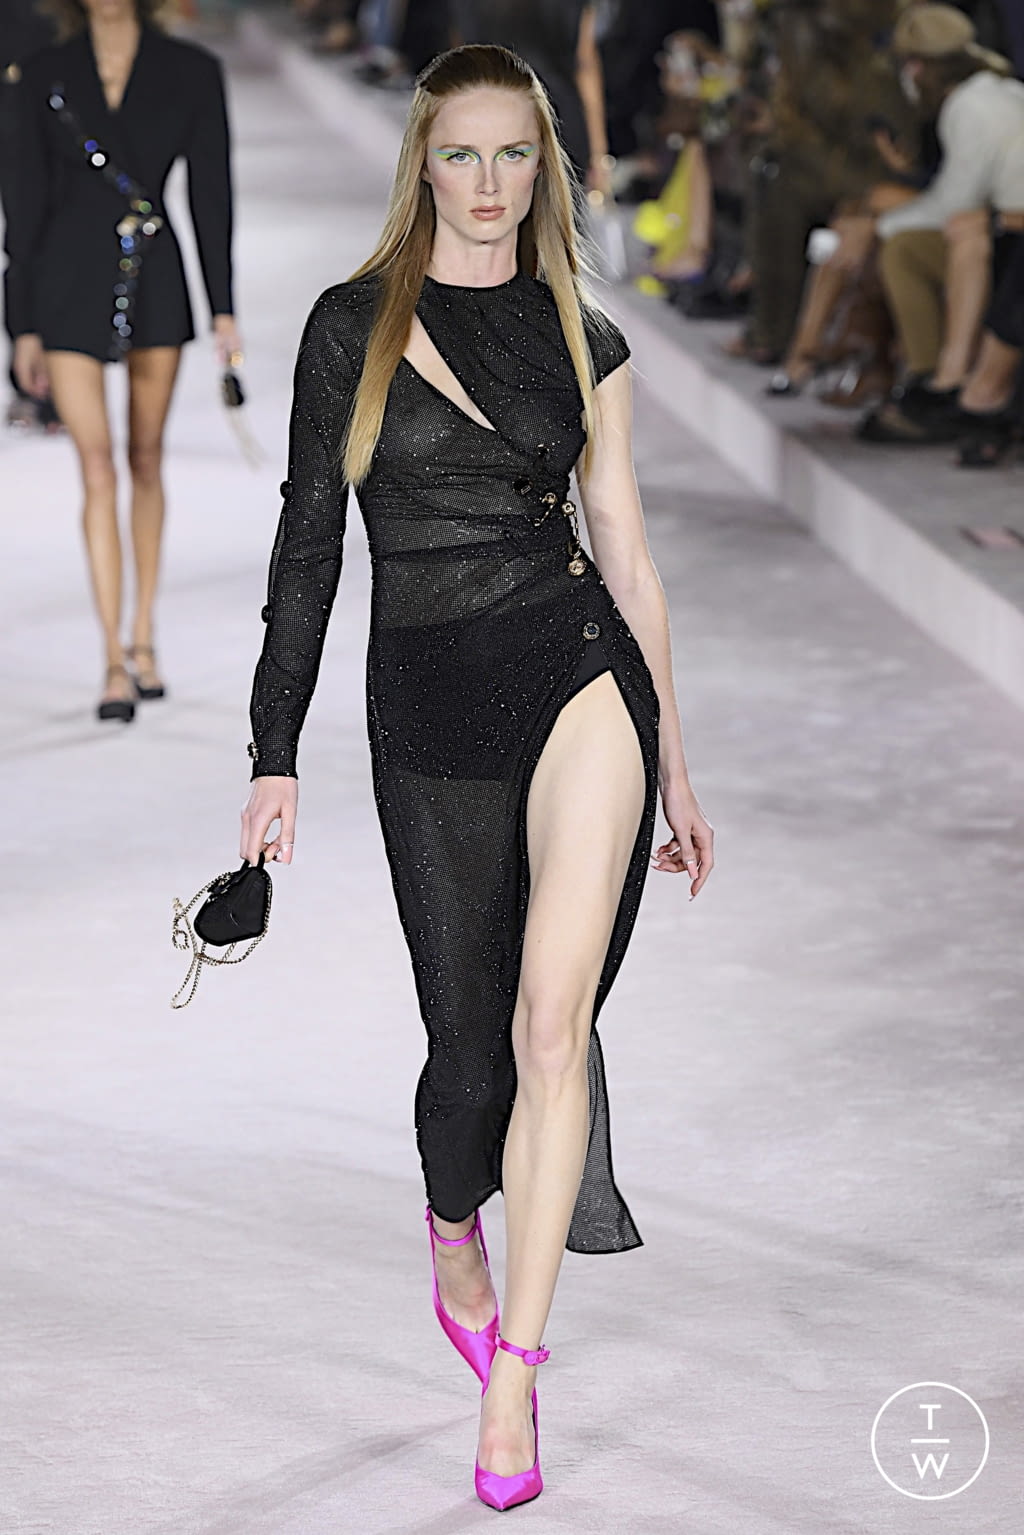 Model Rianne Van Rompaey walks the runway during Louis Vuitton 2019 News  Photo - Getty Images